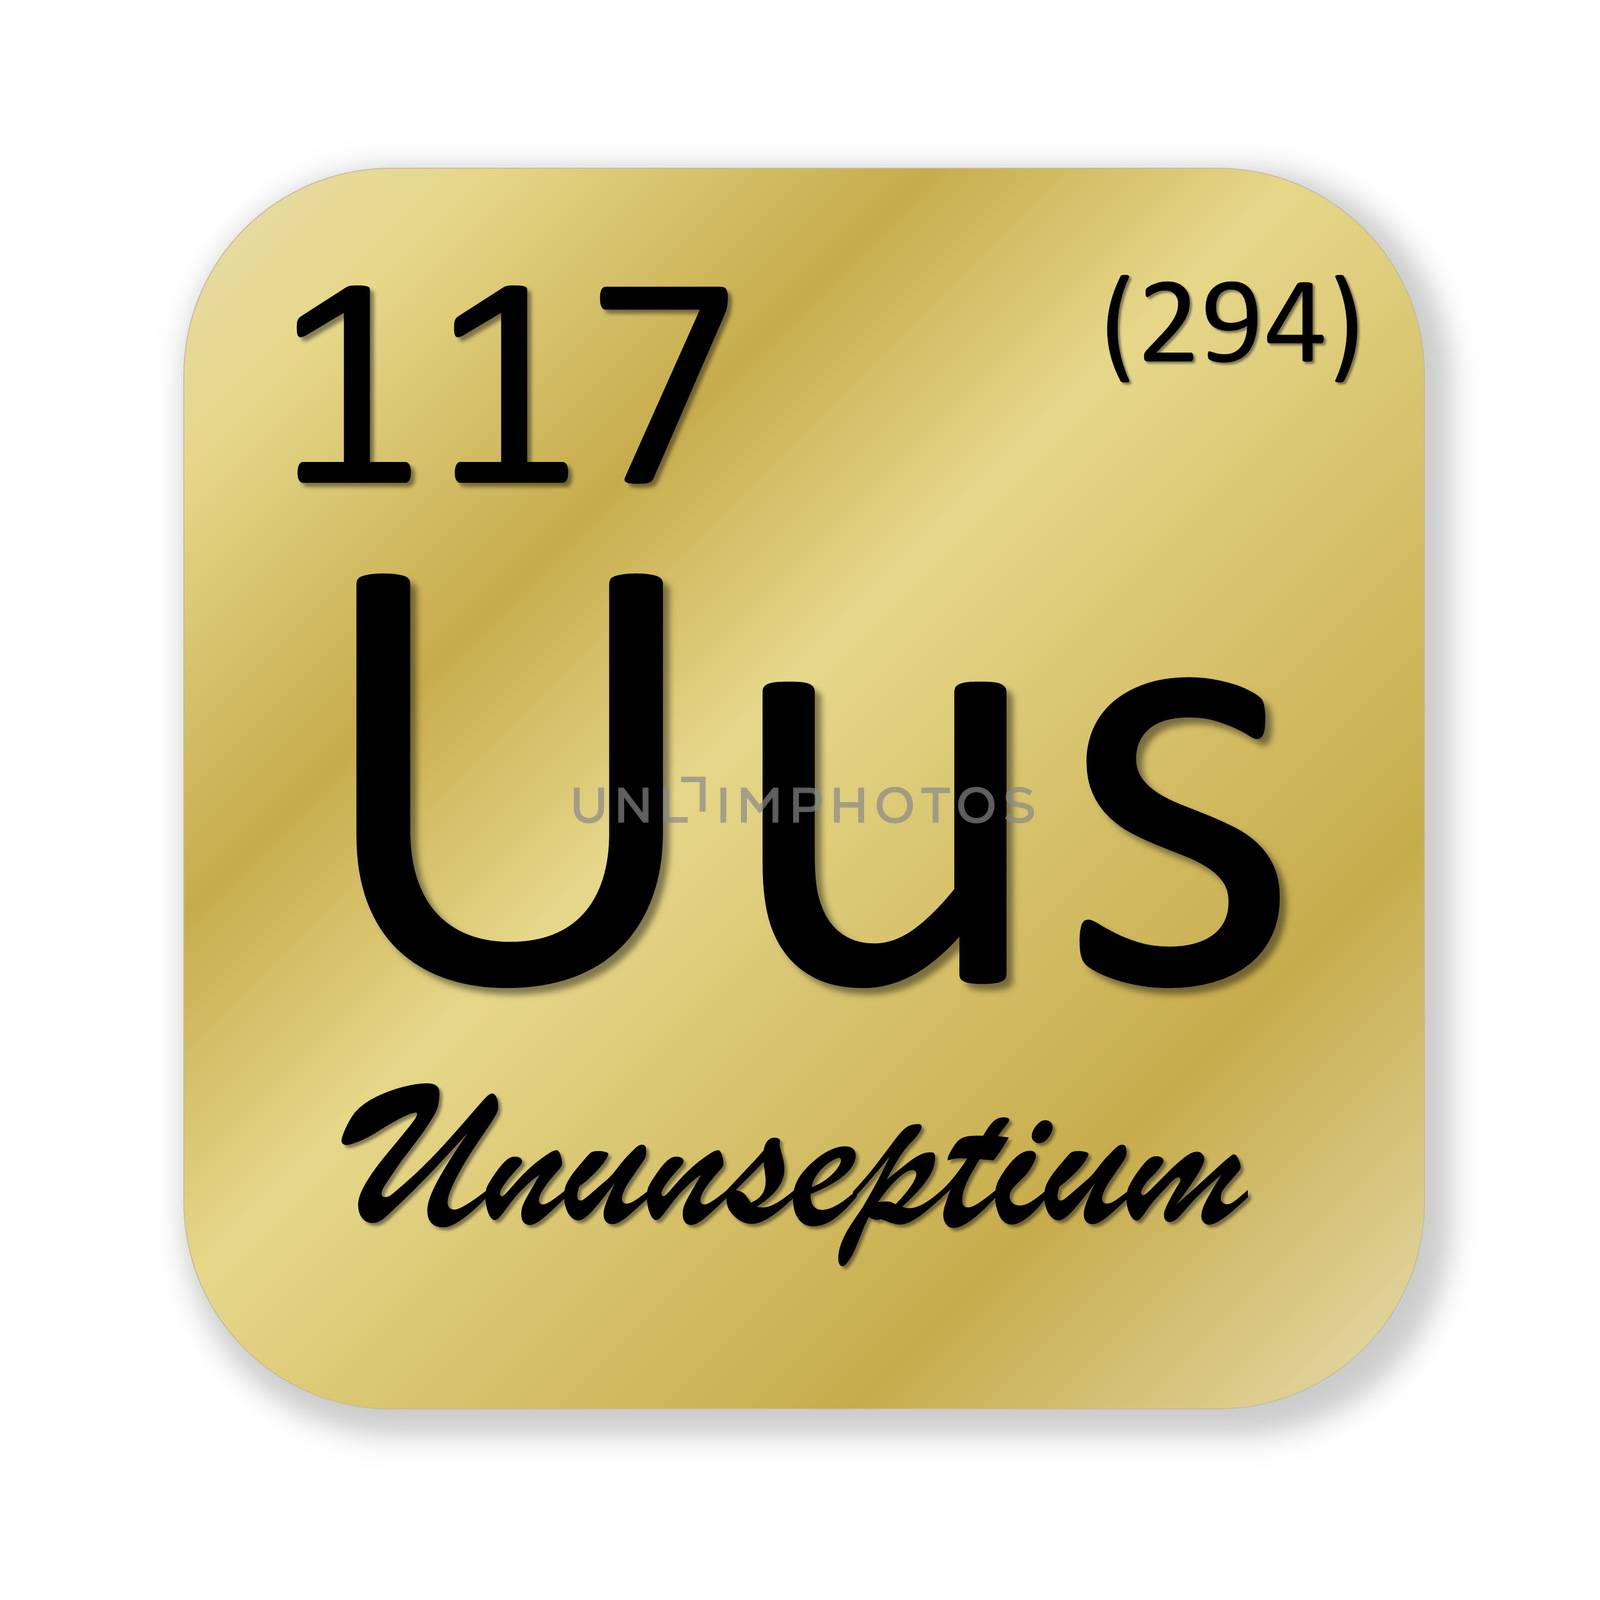 Black ununseptium element into golden square shape isolated in white background